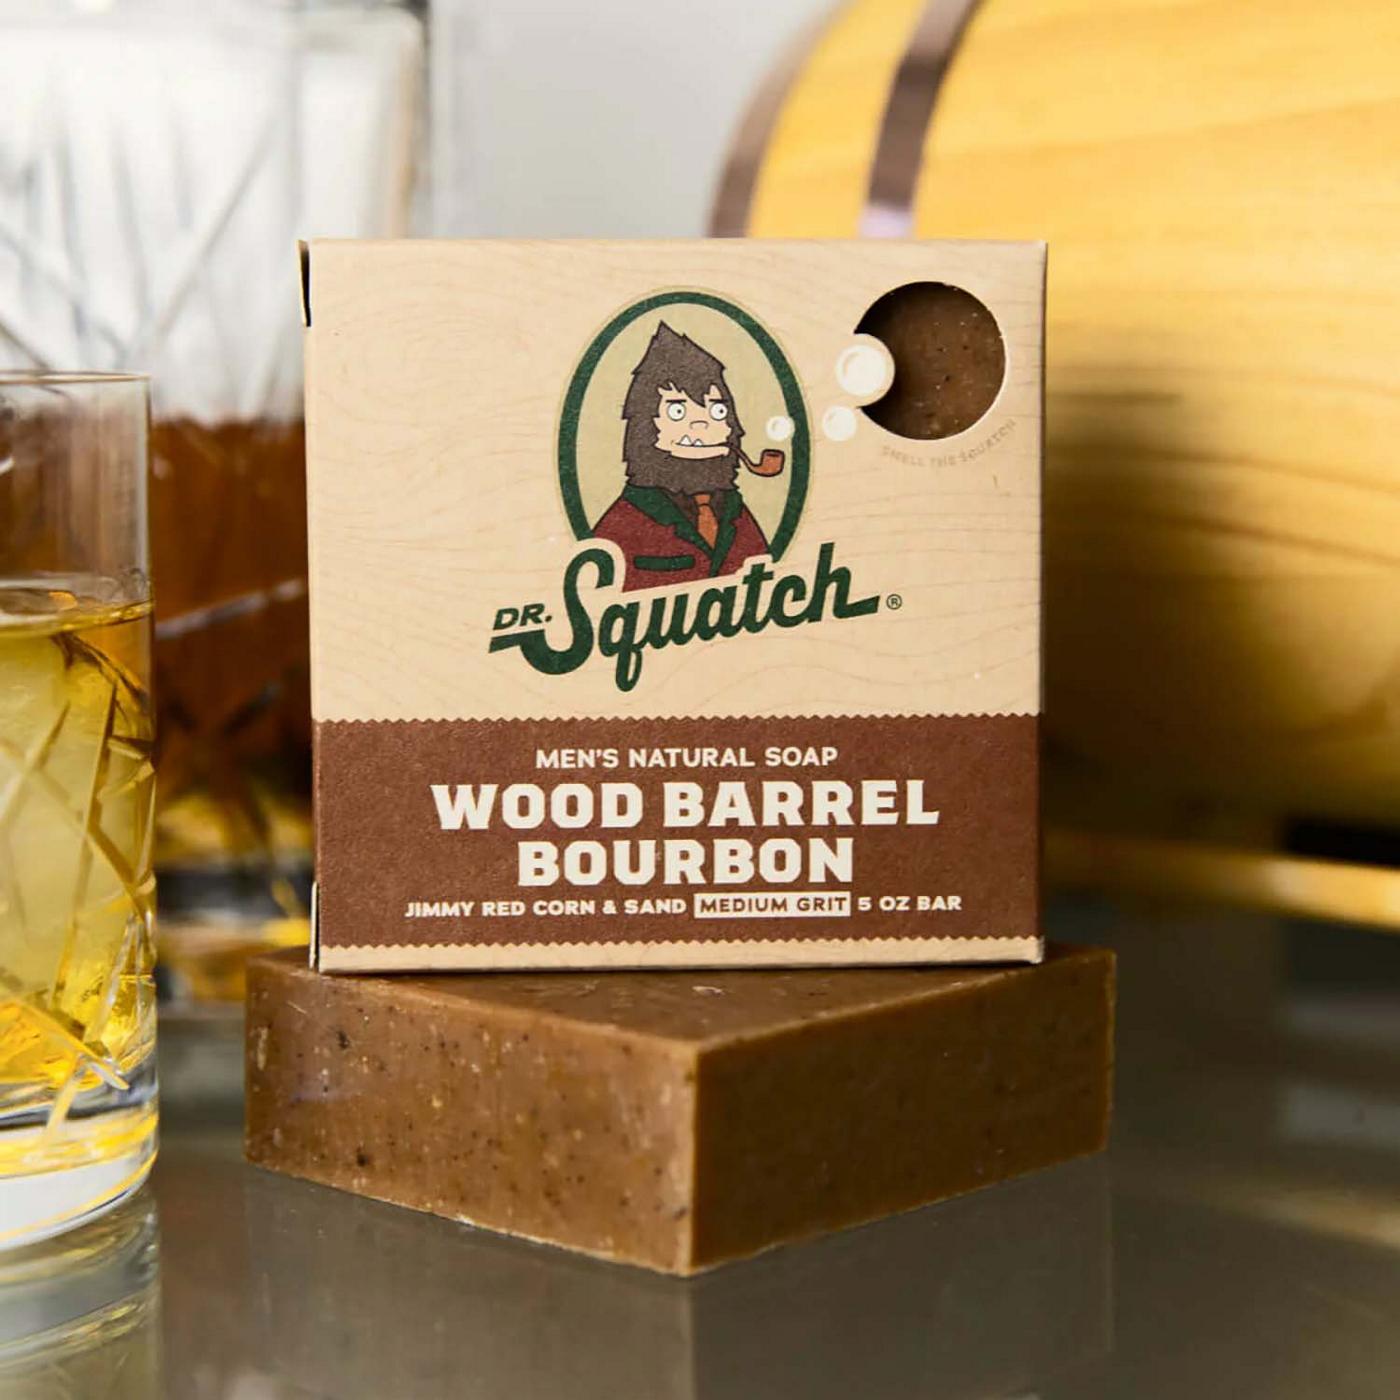 Dr. Squatch Men's Natural Soap Bar - Wood Barrel Bourbon; image 6 of 7